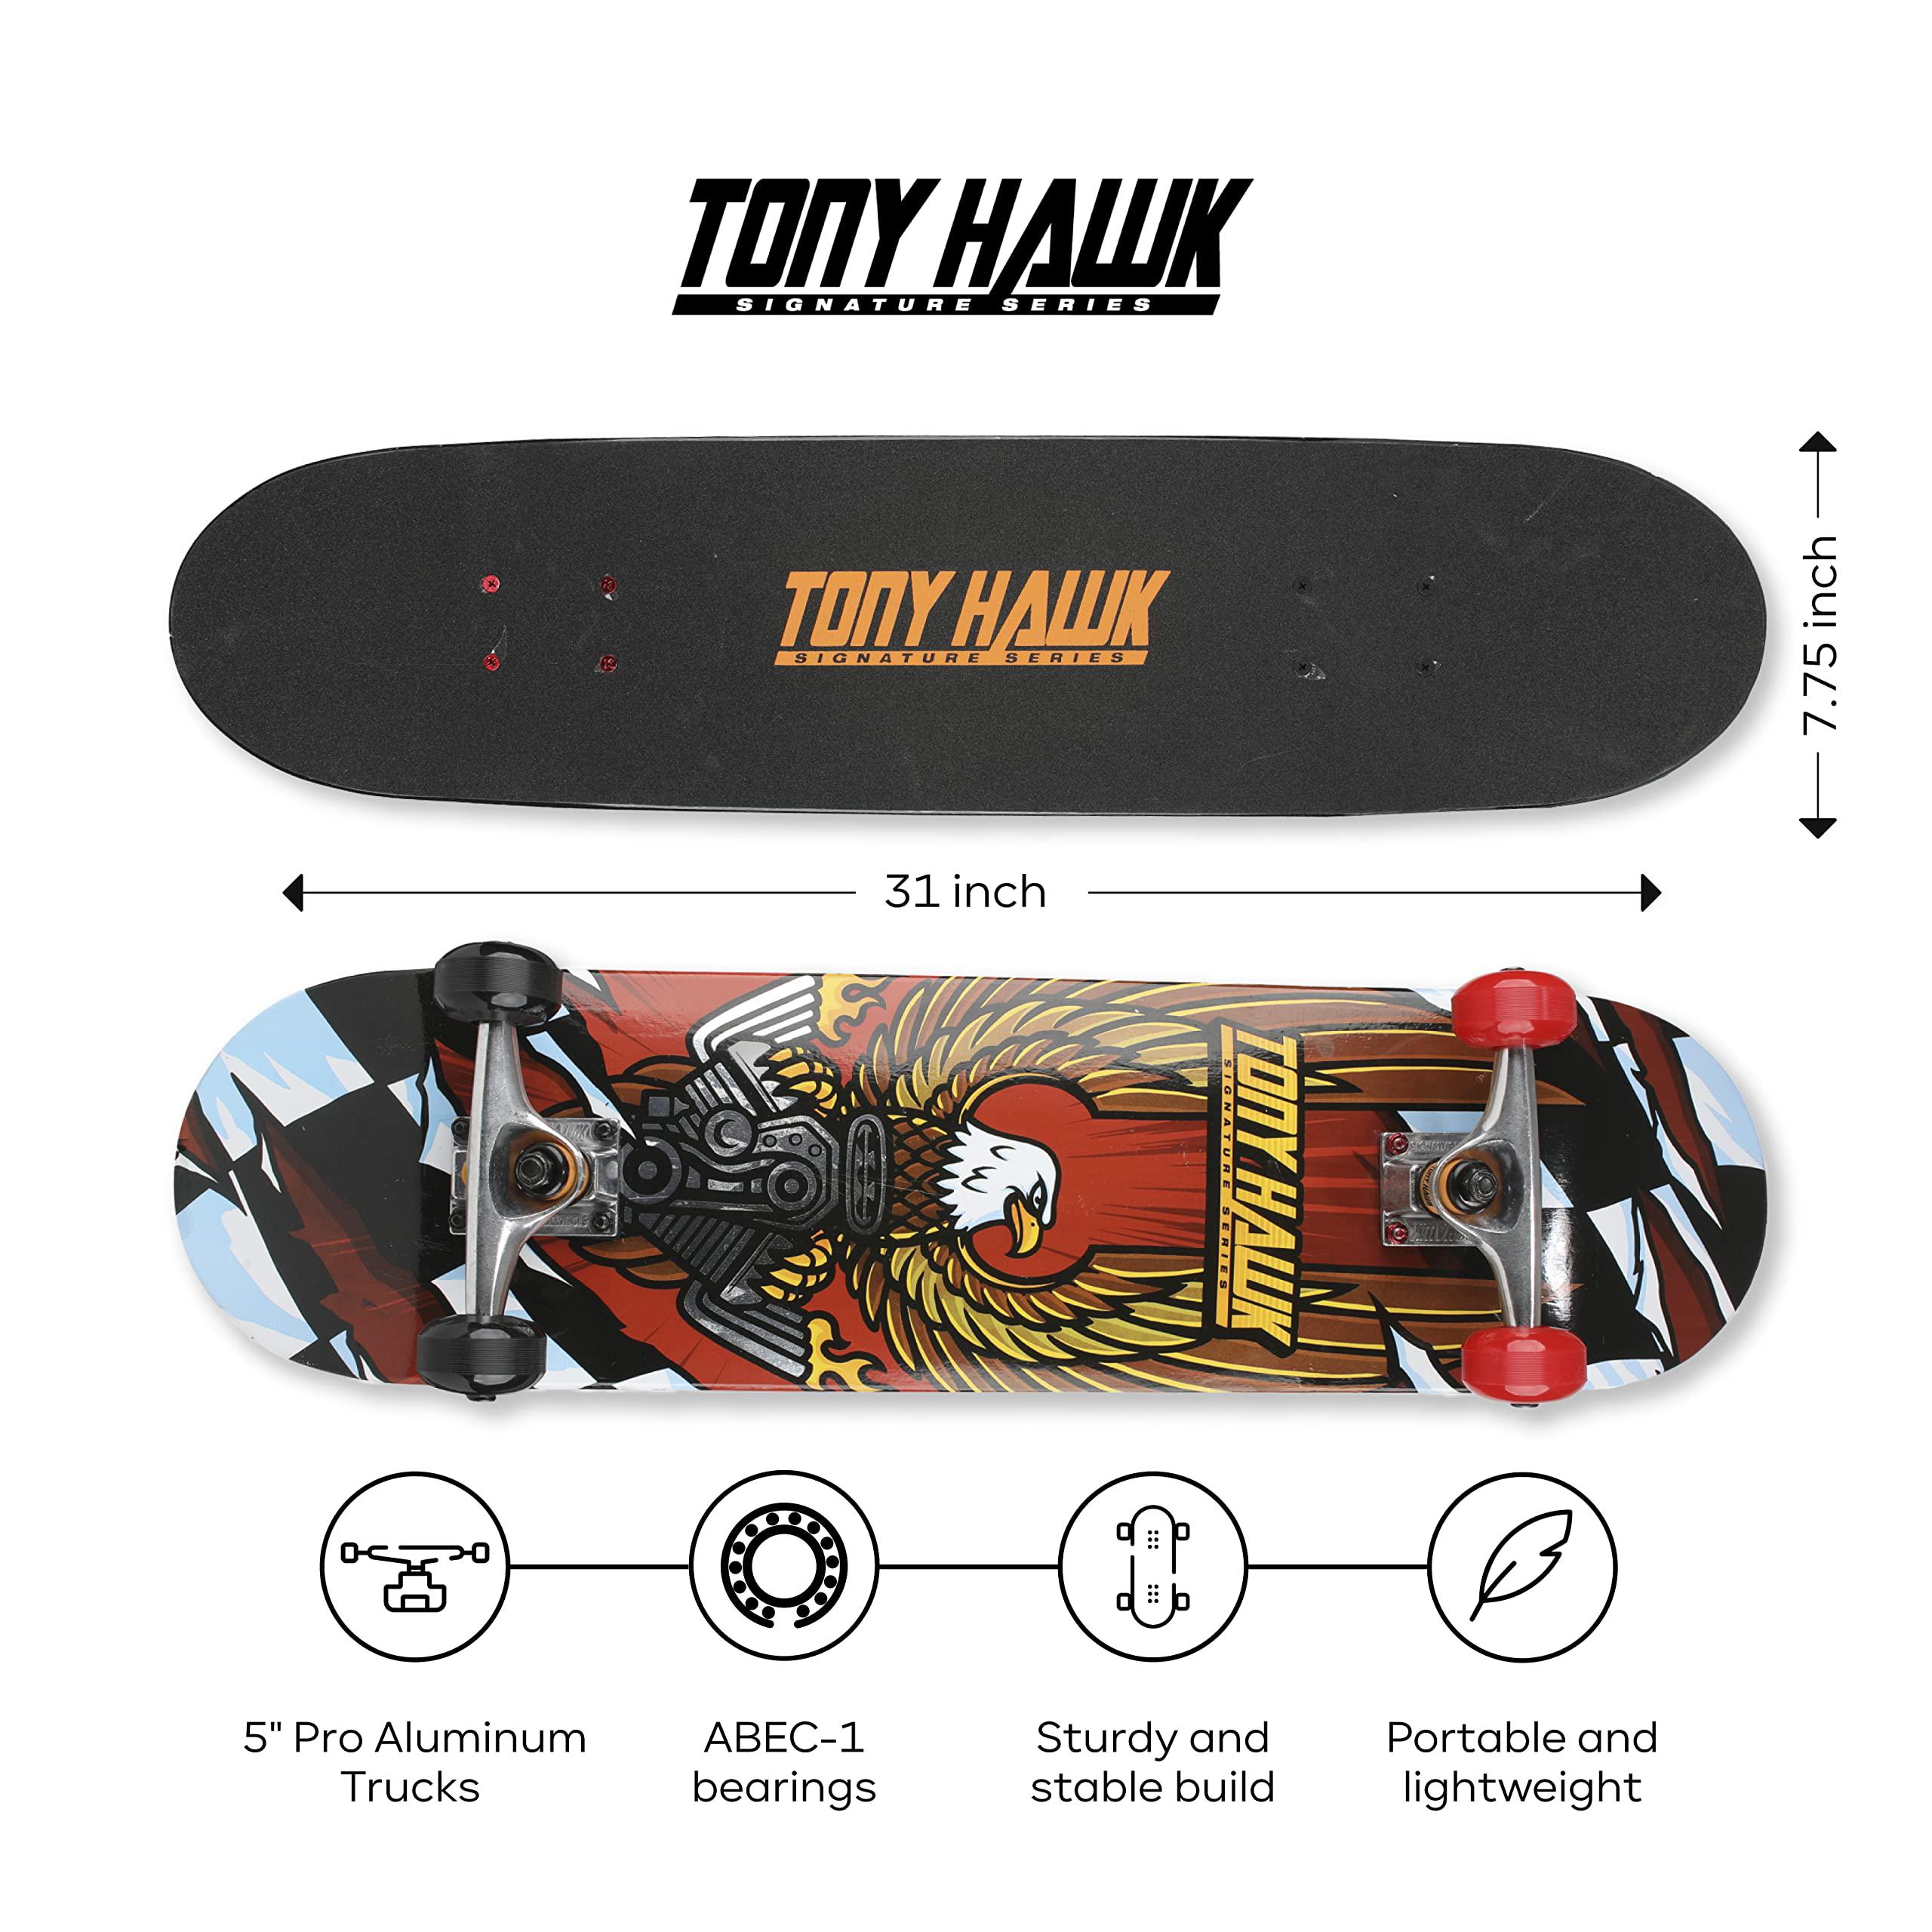 Voyager tony hawk 31 inch skateboard, tony hawk signature series 3, metallic graphics & 9-ply maple deck skateboard for cruising, car